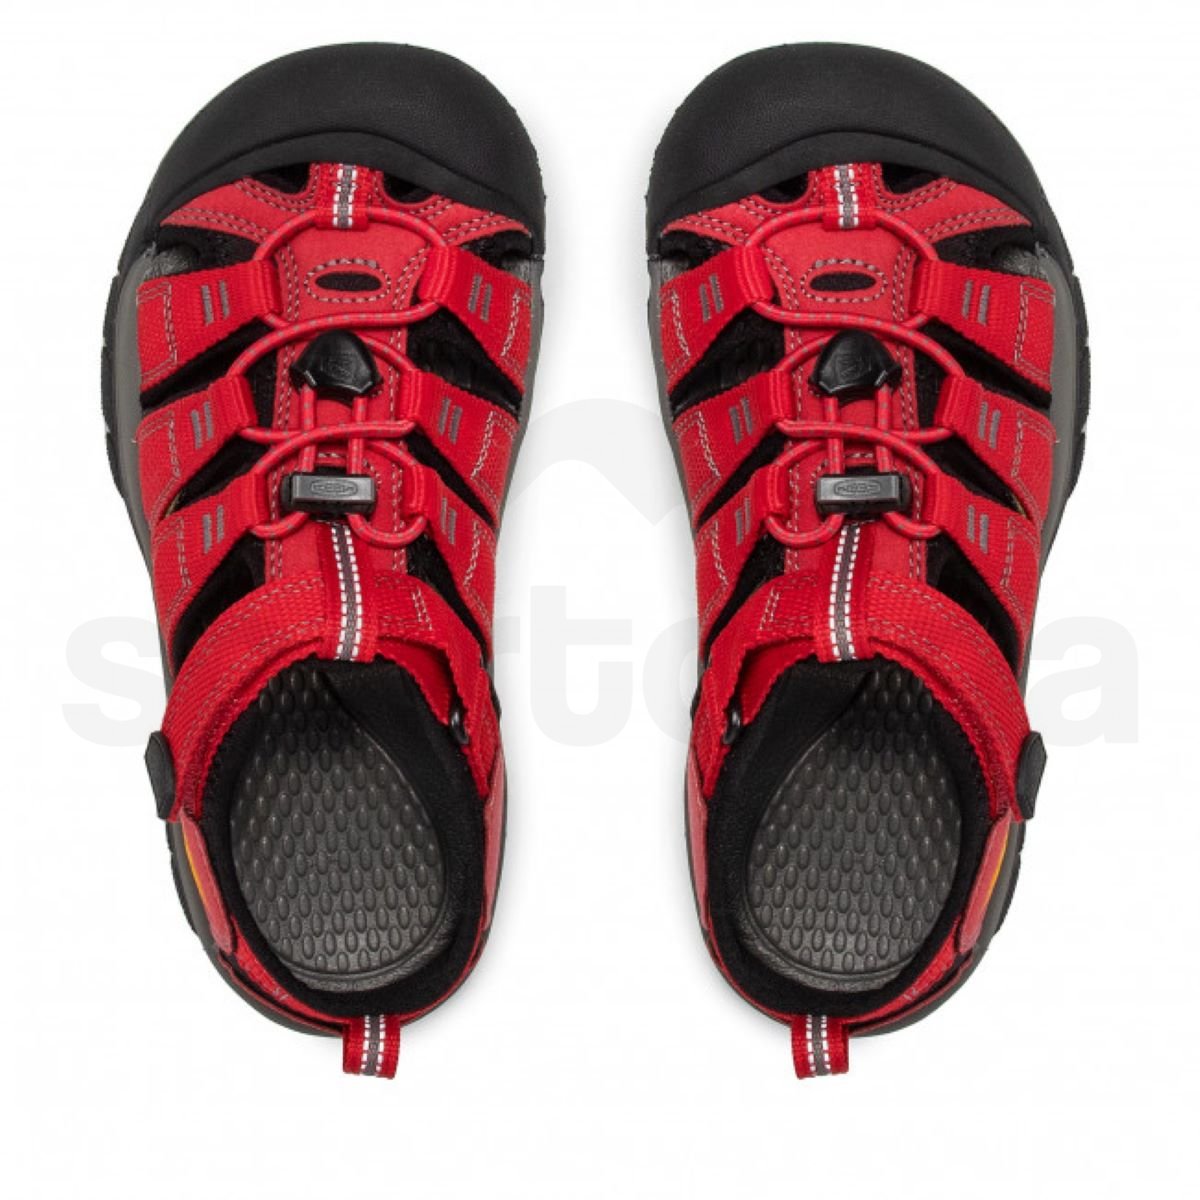 Obuv - sandály Keen Newport H2 J - červená